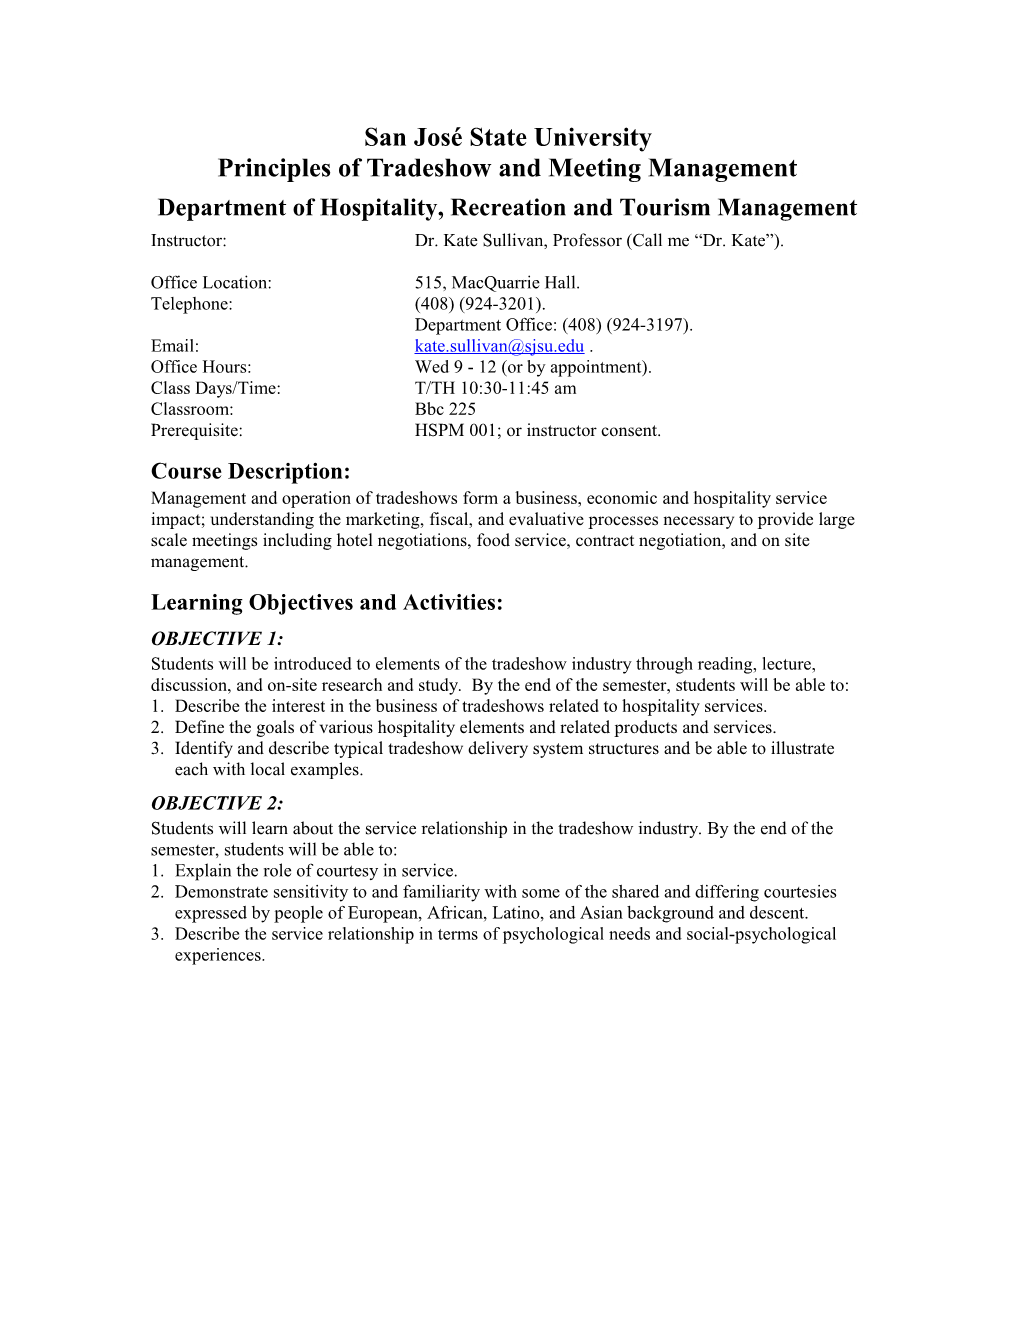 Principles of Tradeshow Management